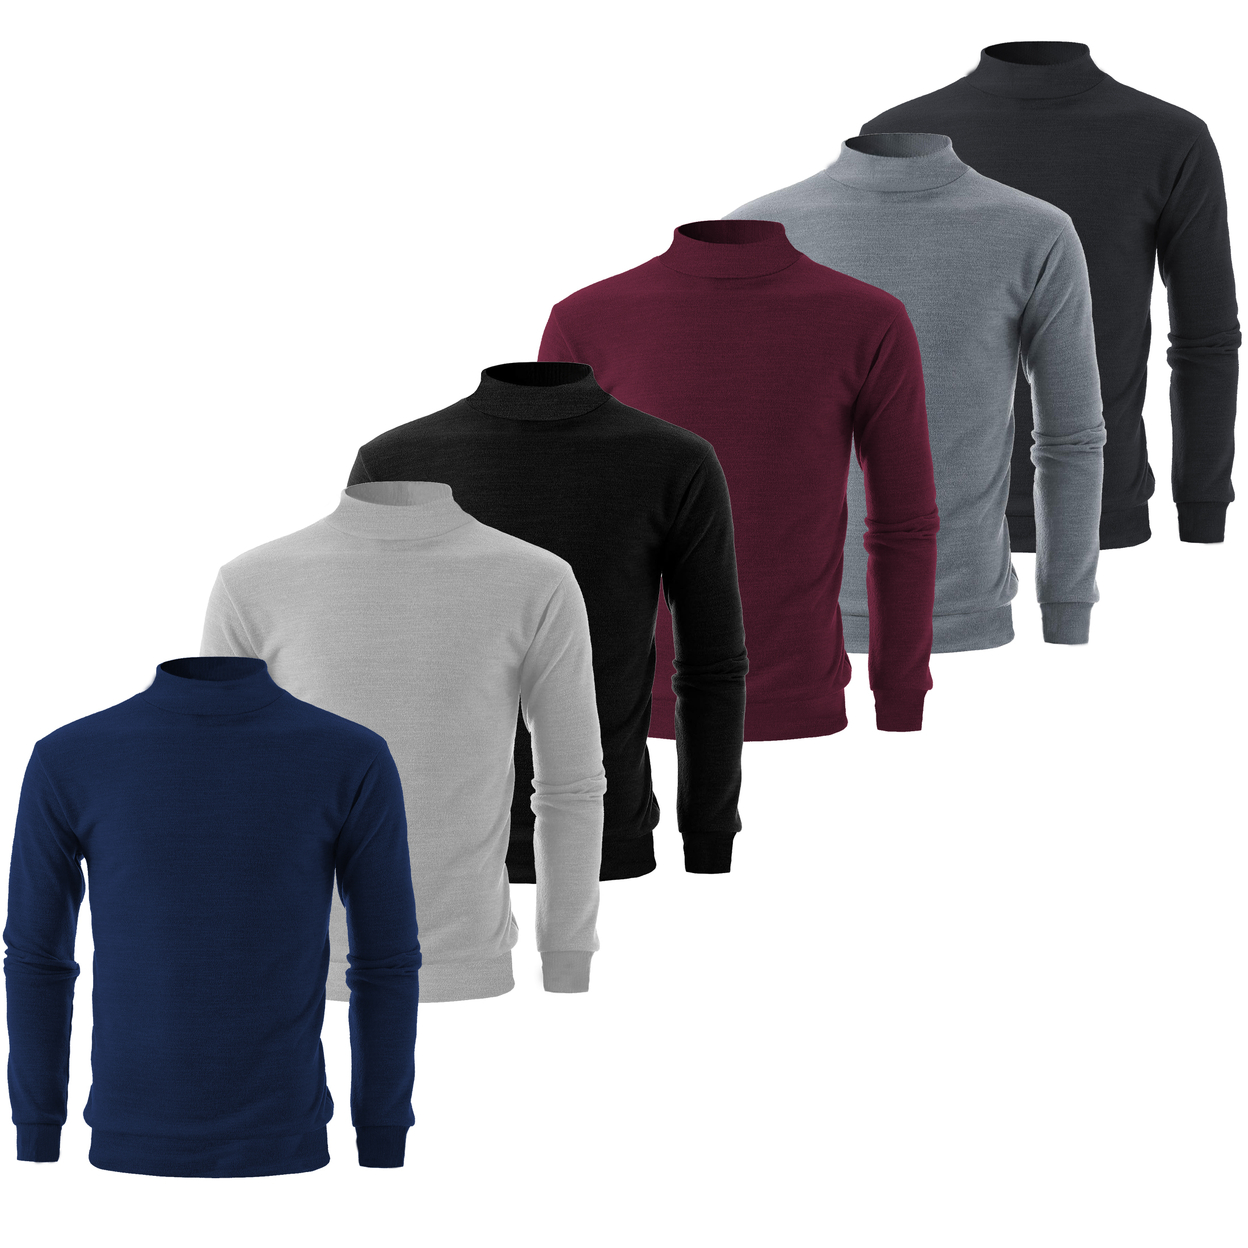 Men's Winter Warm Cozy Knit Slim-Fit Mock Neck Sweater - Charcoal, Xx-large